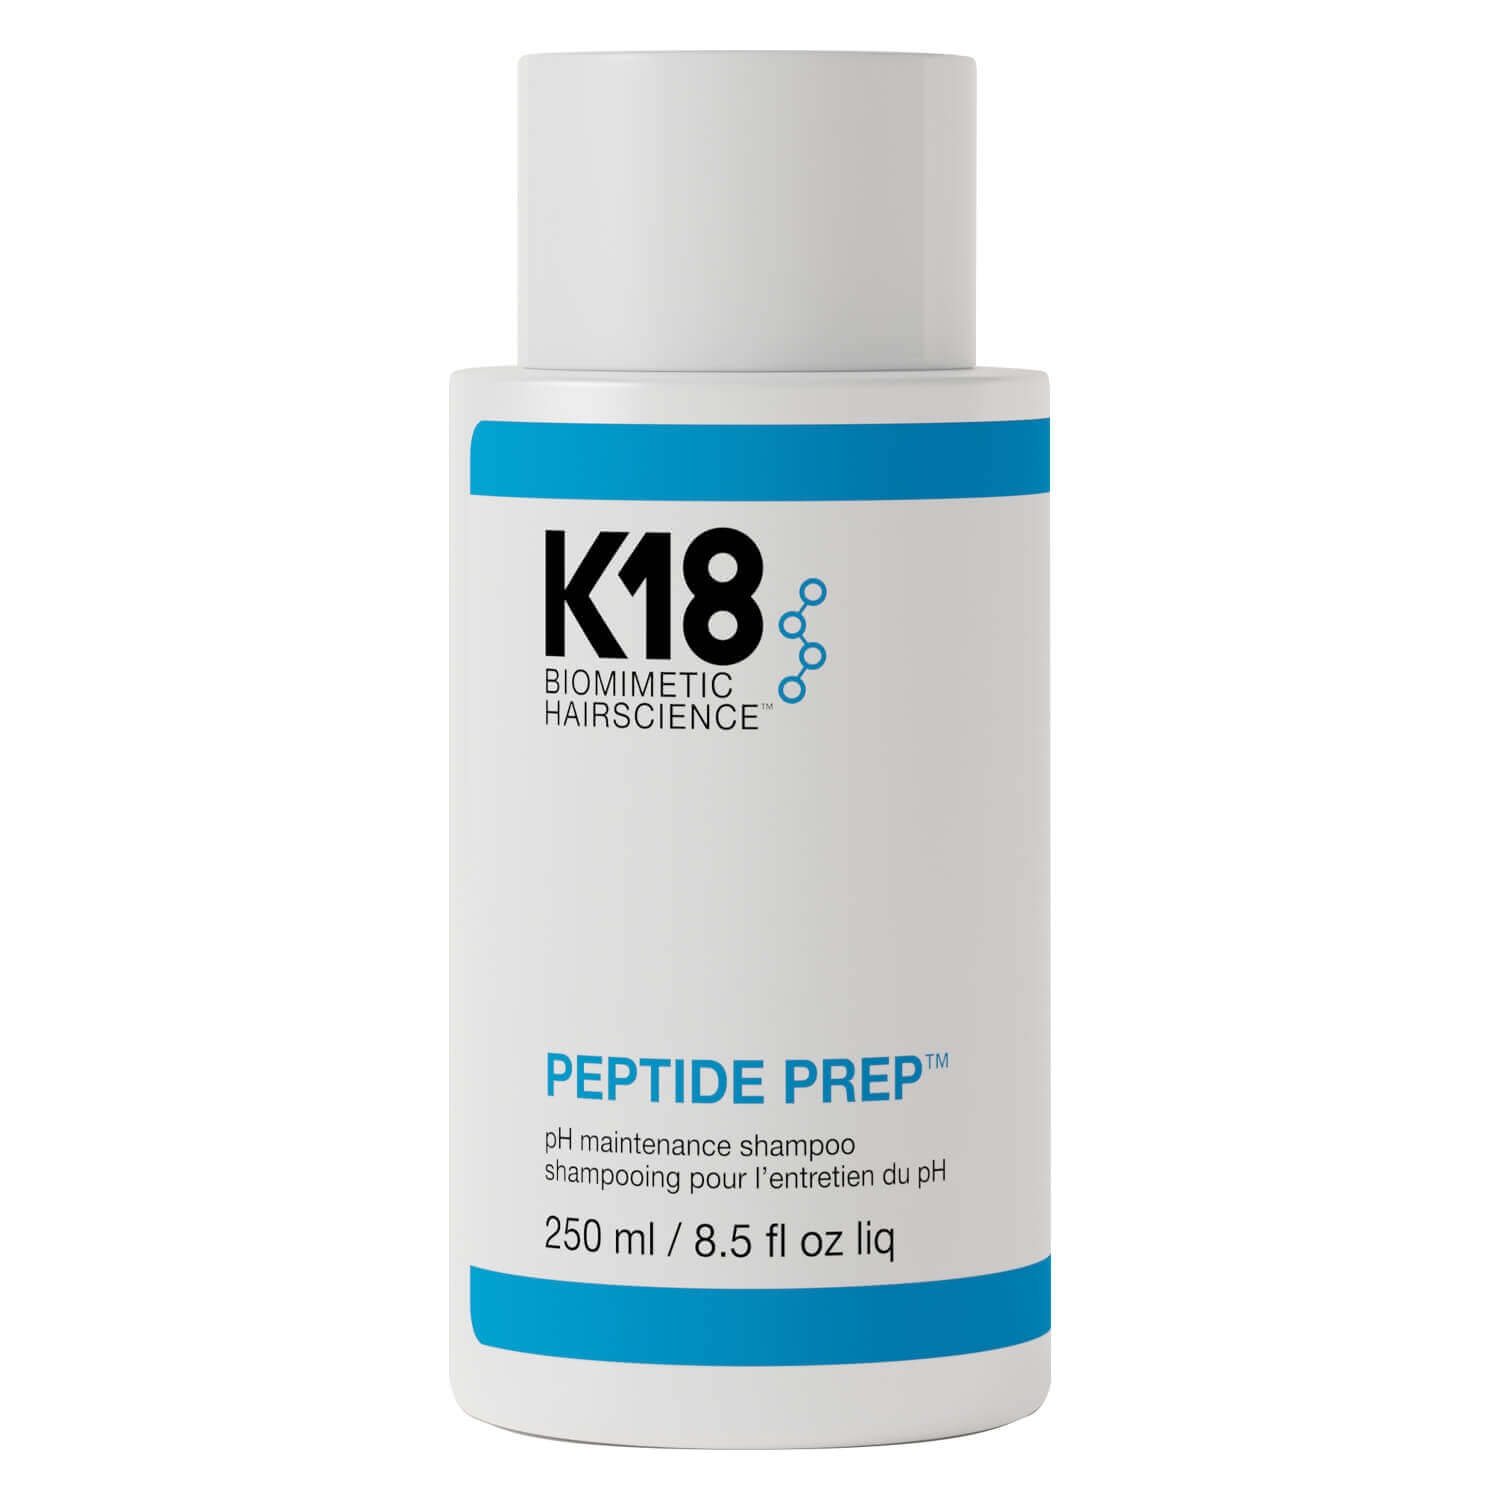 Produktbild von K18 Biomimetic Hairscience - Peptide Prep pH Maintenance Shampoo